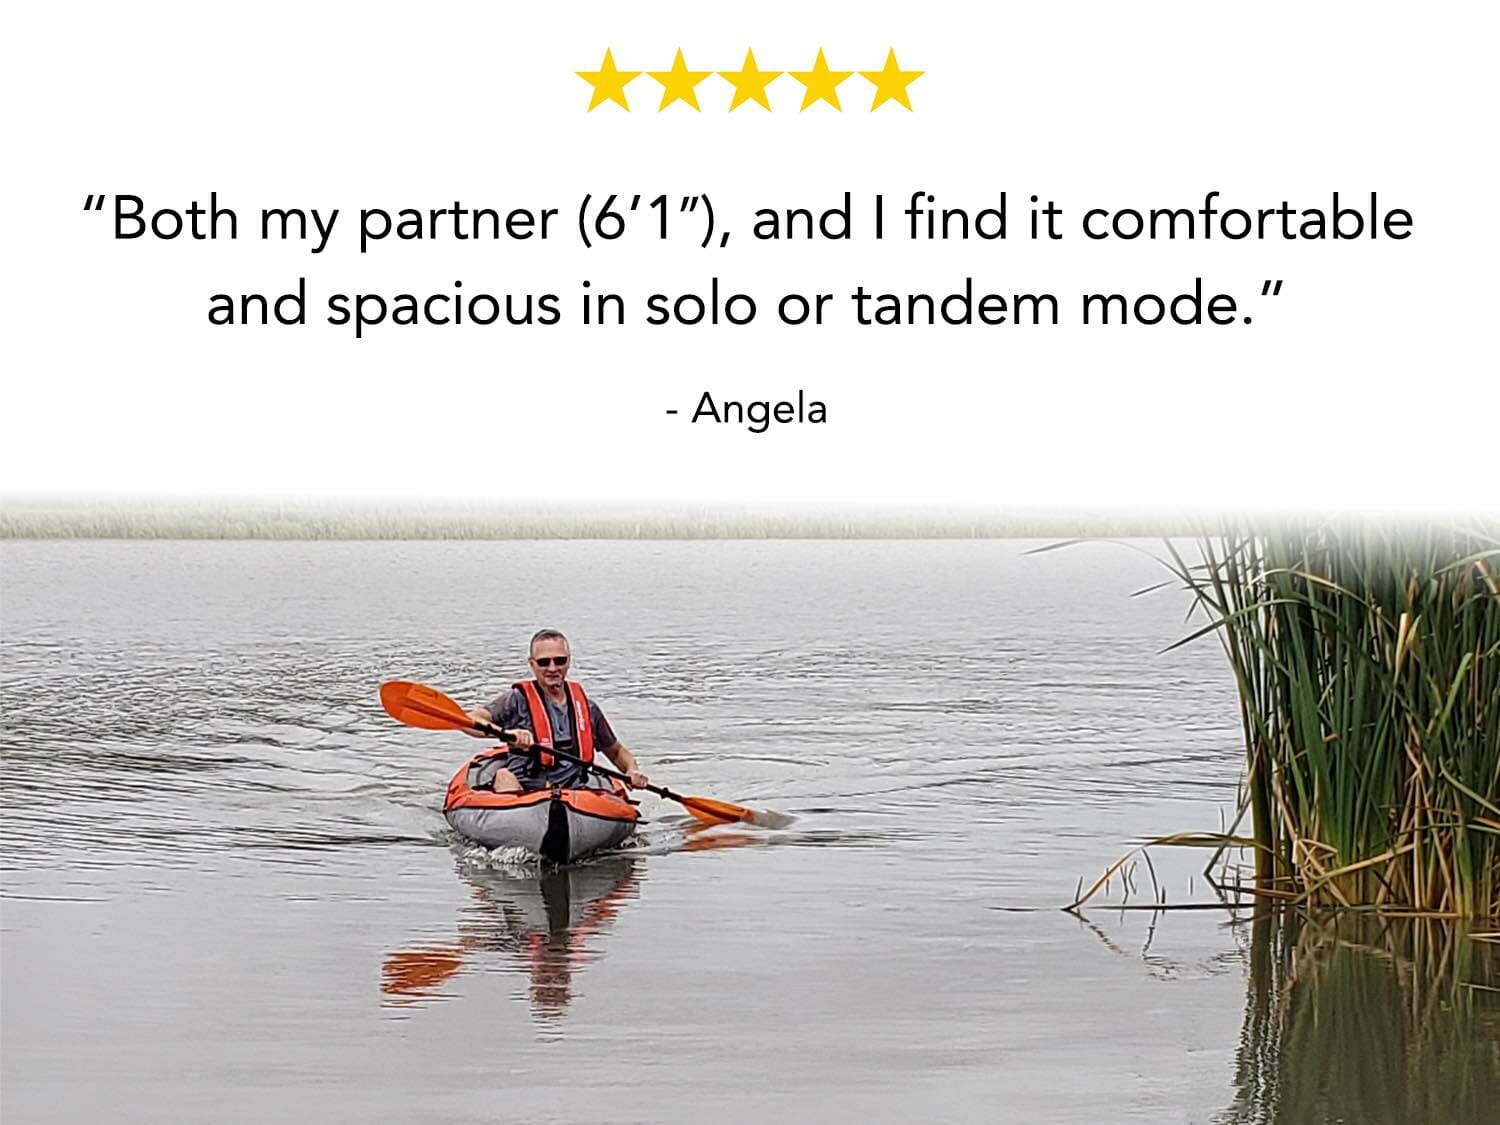 advancedframe convertible elite kayak angela testimonial